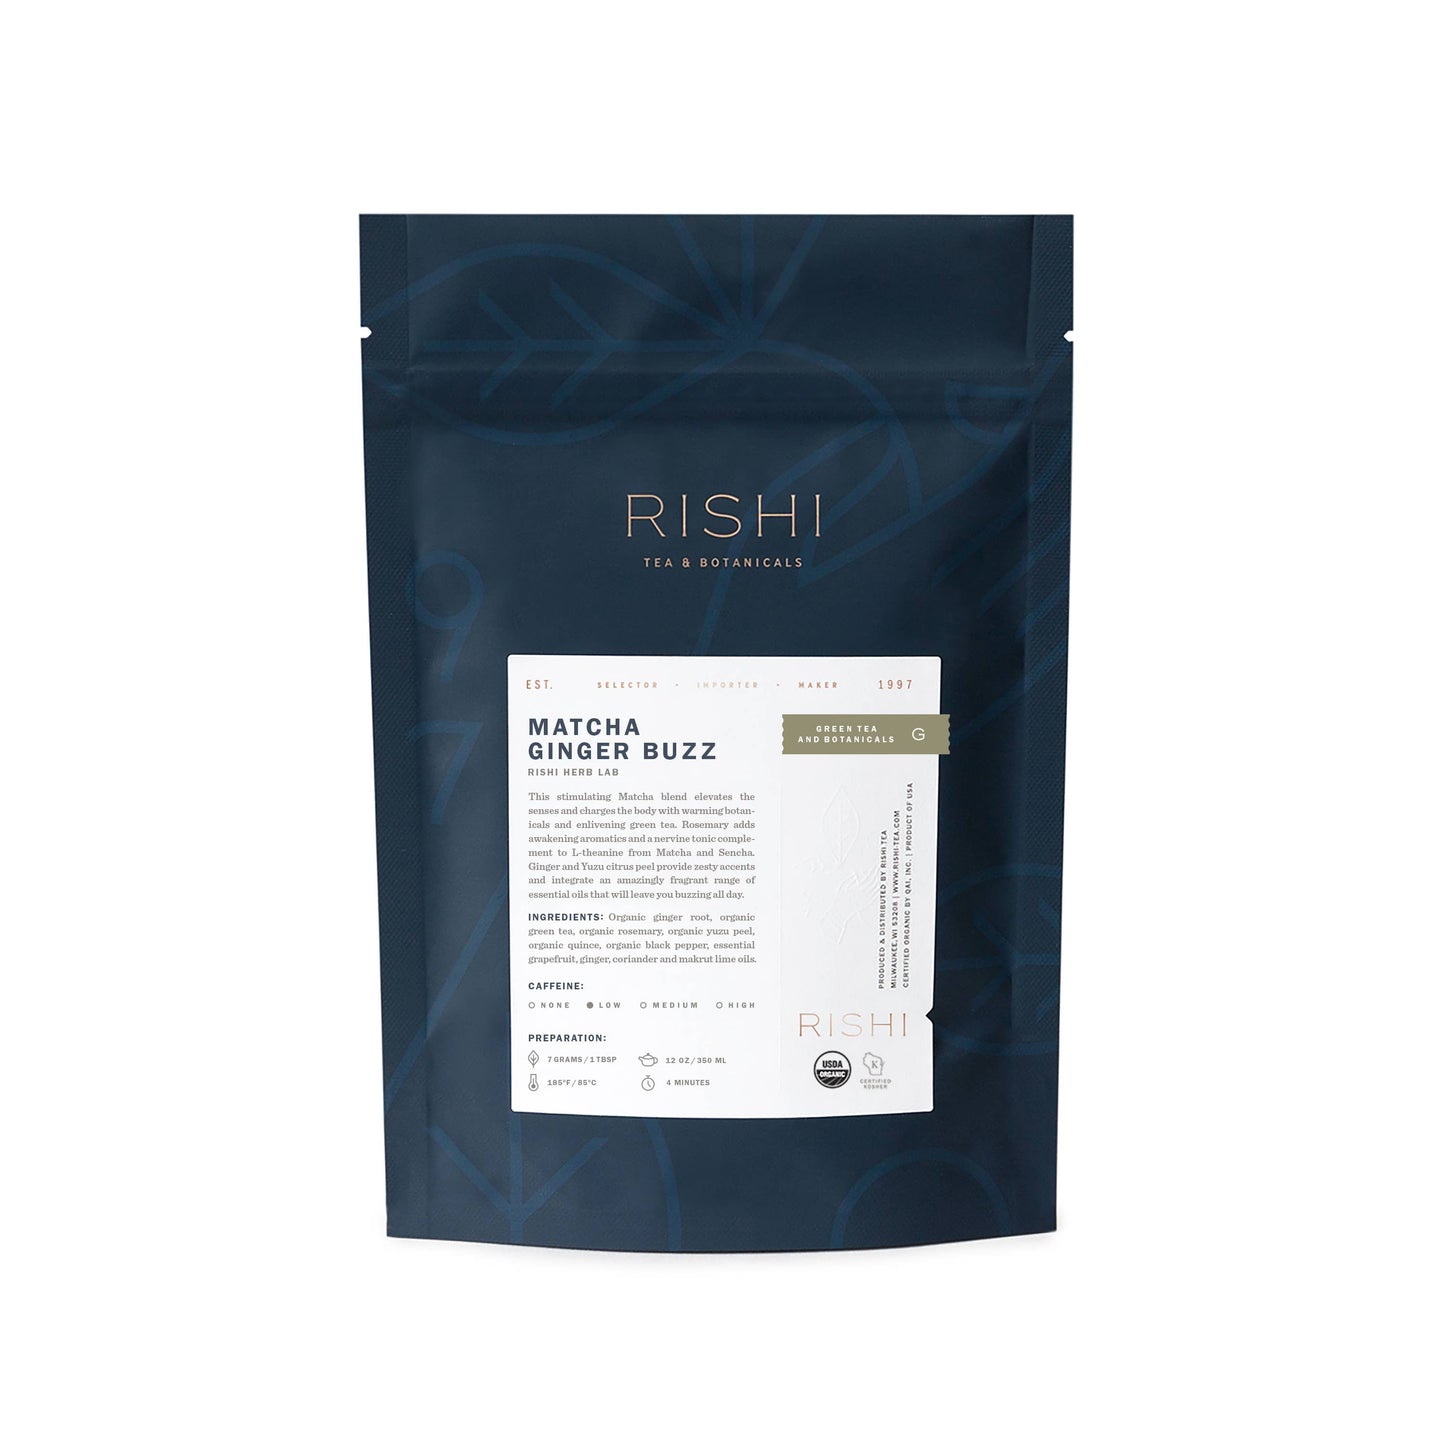 Rishi Tea & Botanicals - Matcha Ginger Buzz Organic Loose Green Tea Blend